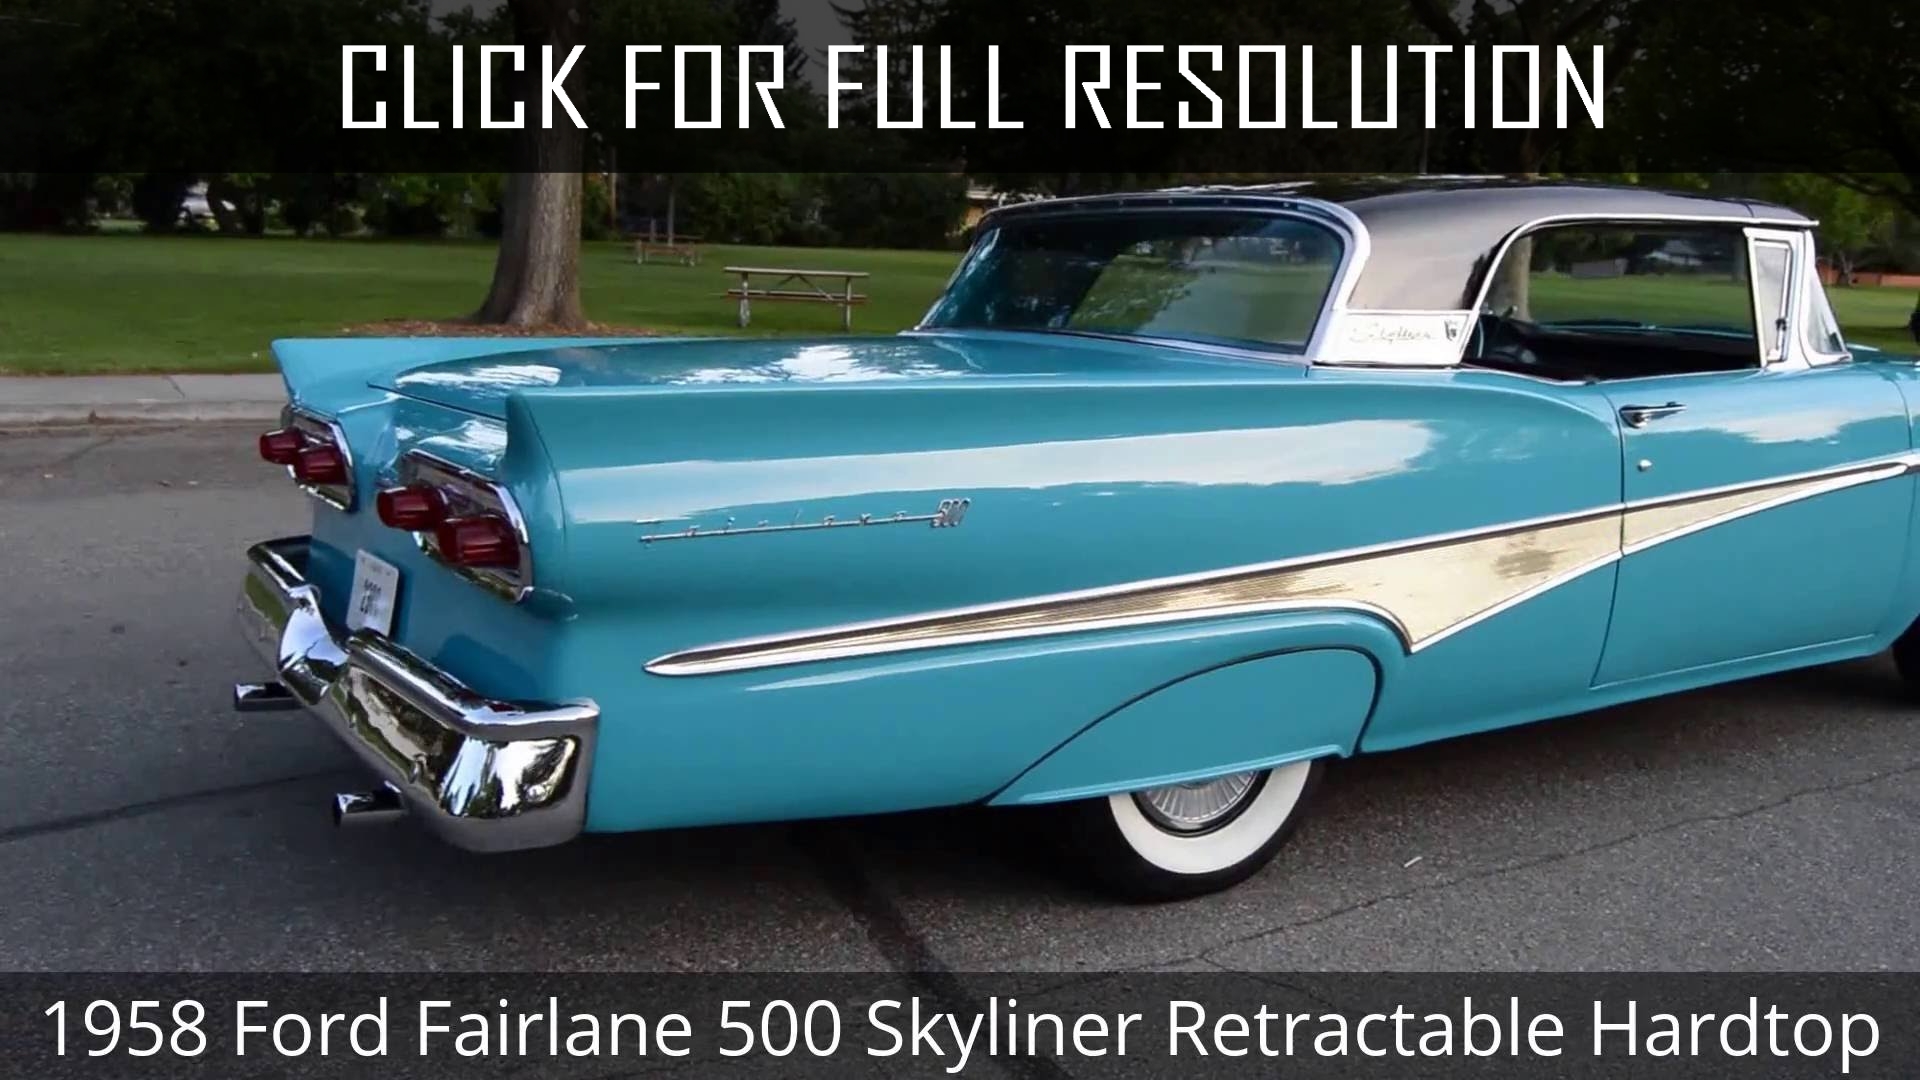 Ford Fairlane Retractable Hardtop